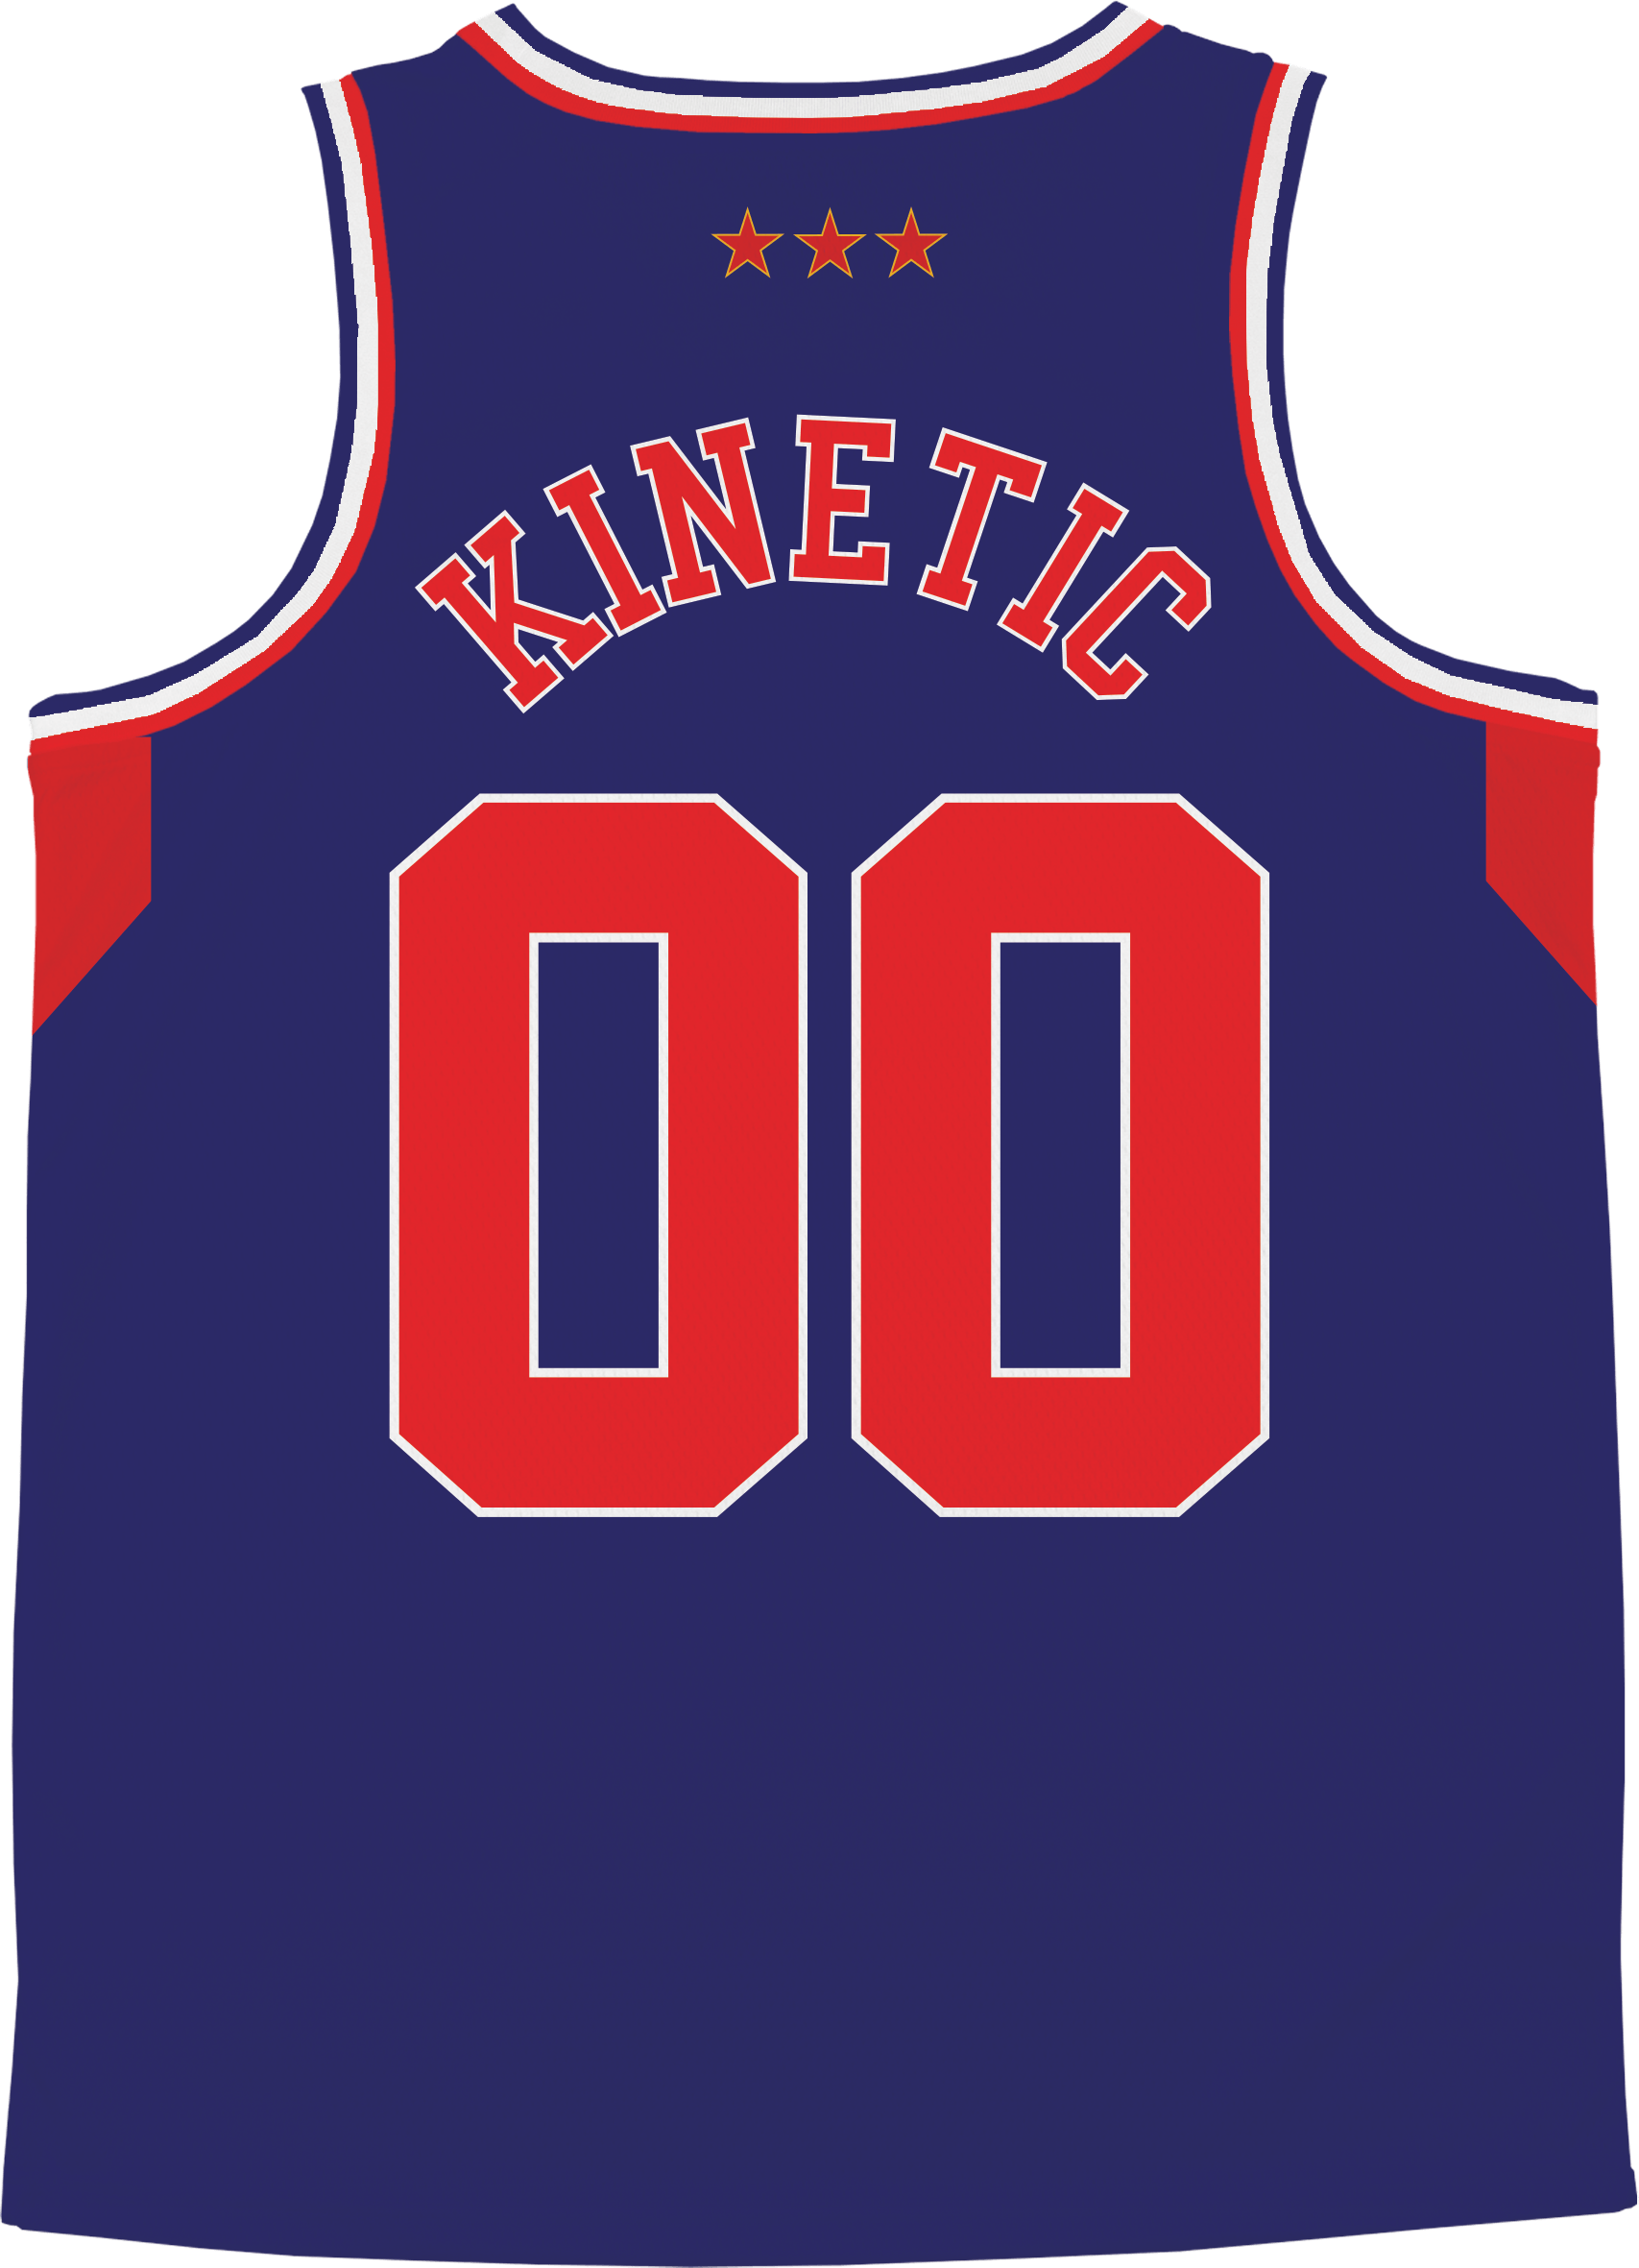 Phi Kappa Tau - Retro Ballers Basketball Jersey - Kinetic Society